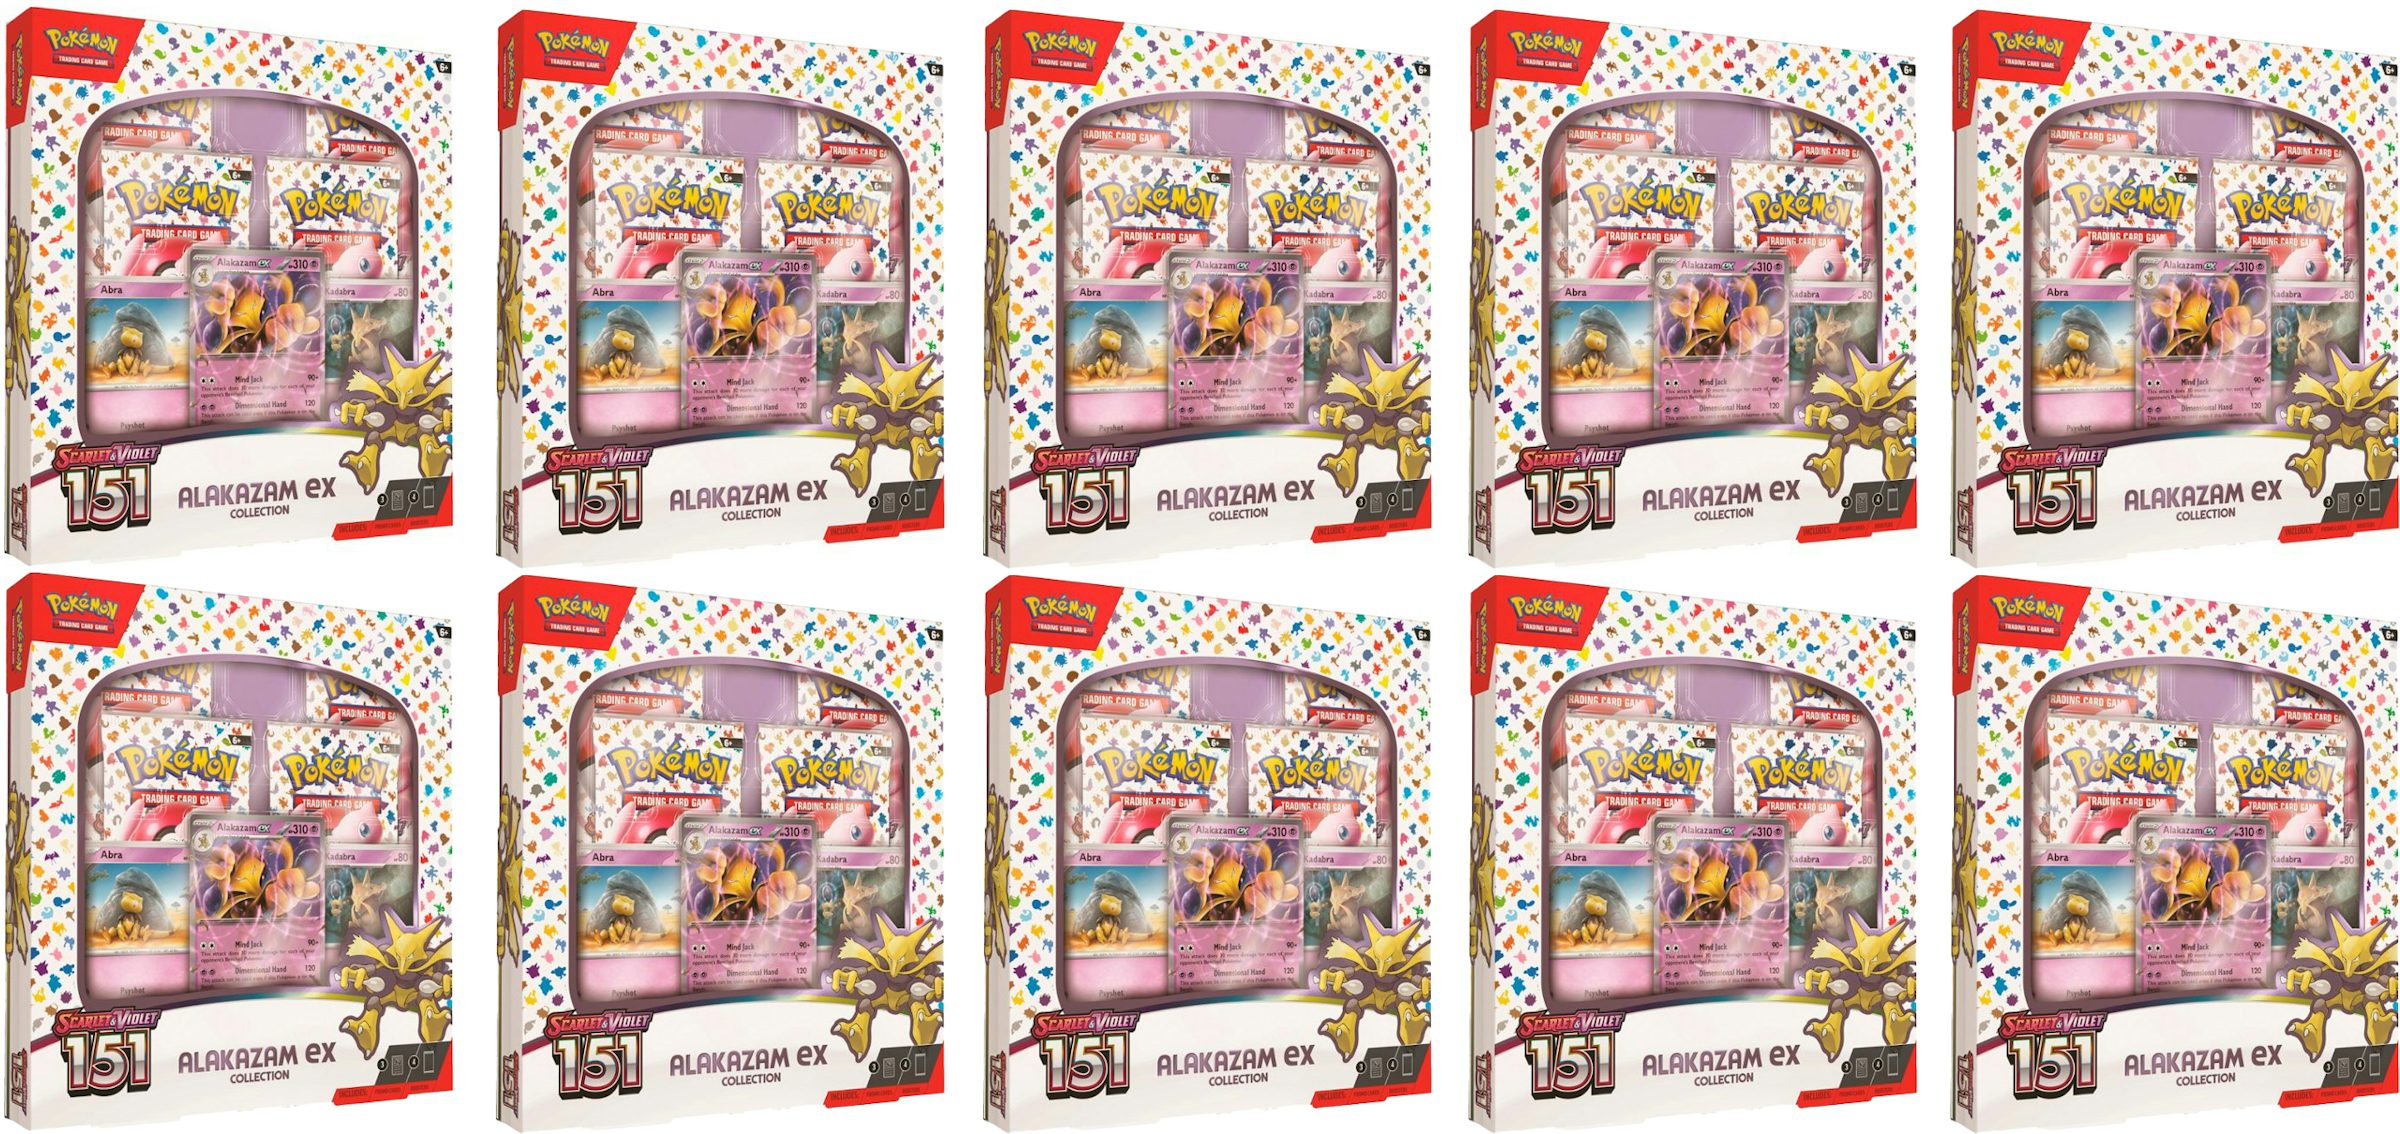 Trading Card Game Scarlet & Violet Pokemon 151 Alakazam ex & Zapdos ex Set  of 2 Collection Boxes [ENGLISH, 4 Booster Packs, 3 Foil Promos & More!]